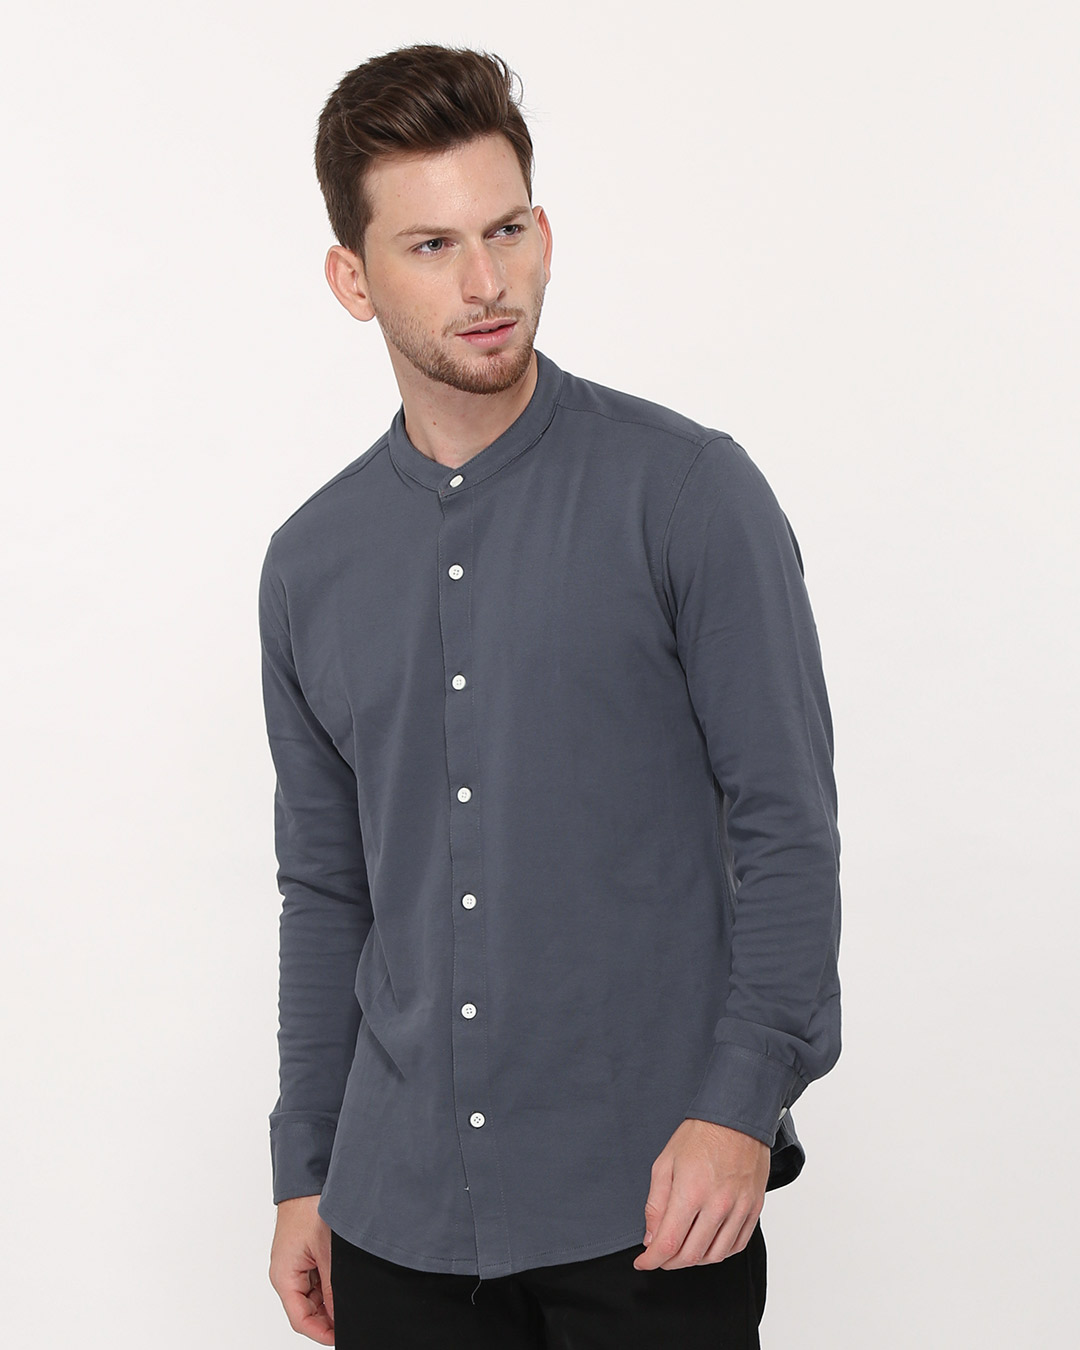 Buy Urban Grey Mandarin Collar Full Sleeve Pique Shirt Online at Bewakoof